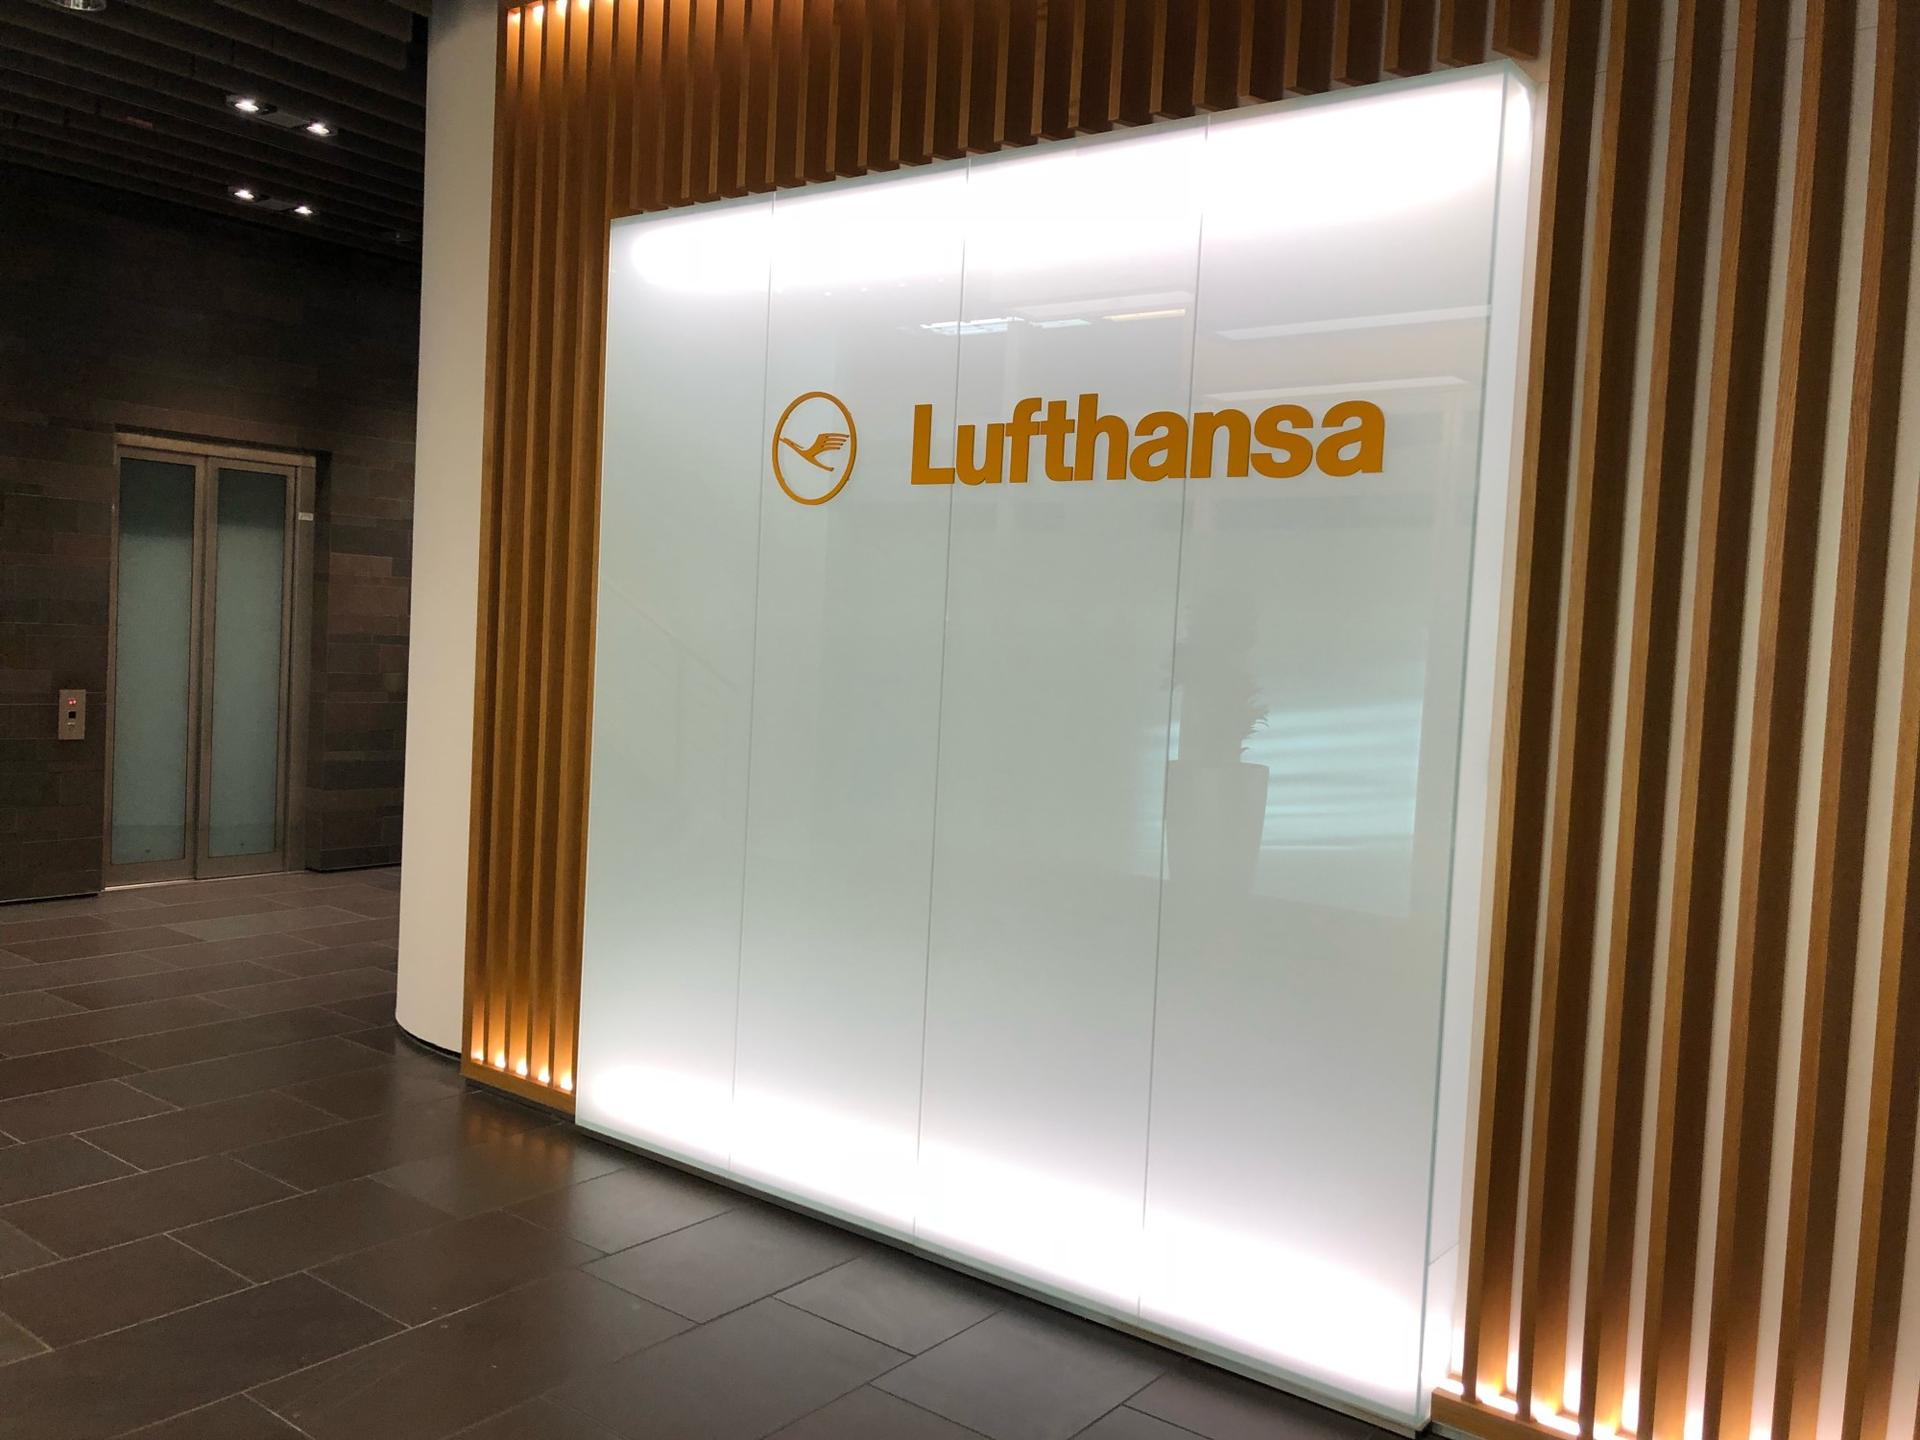 Lufthansa First Class Lounge image 38 of 42